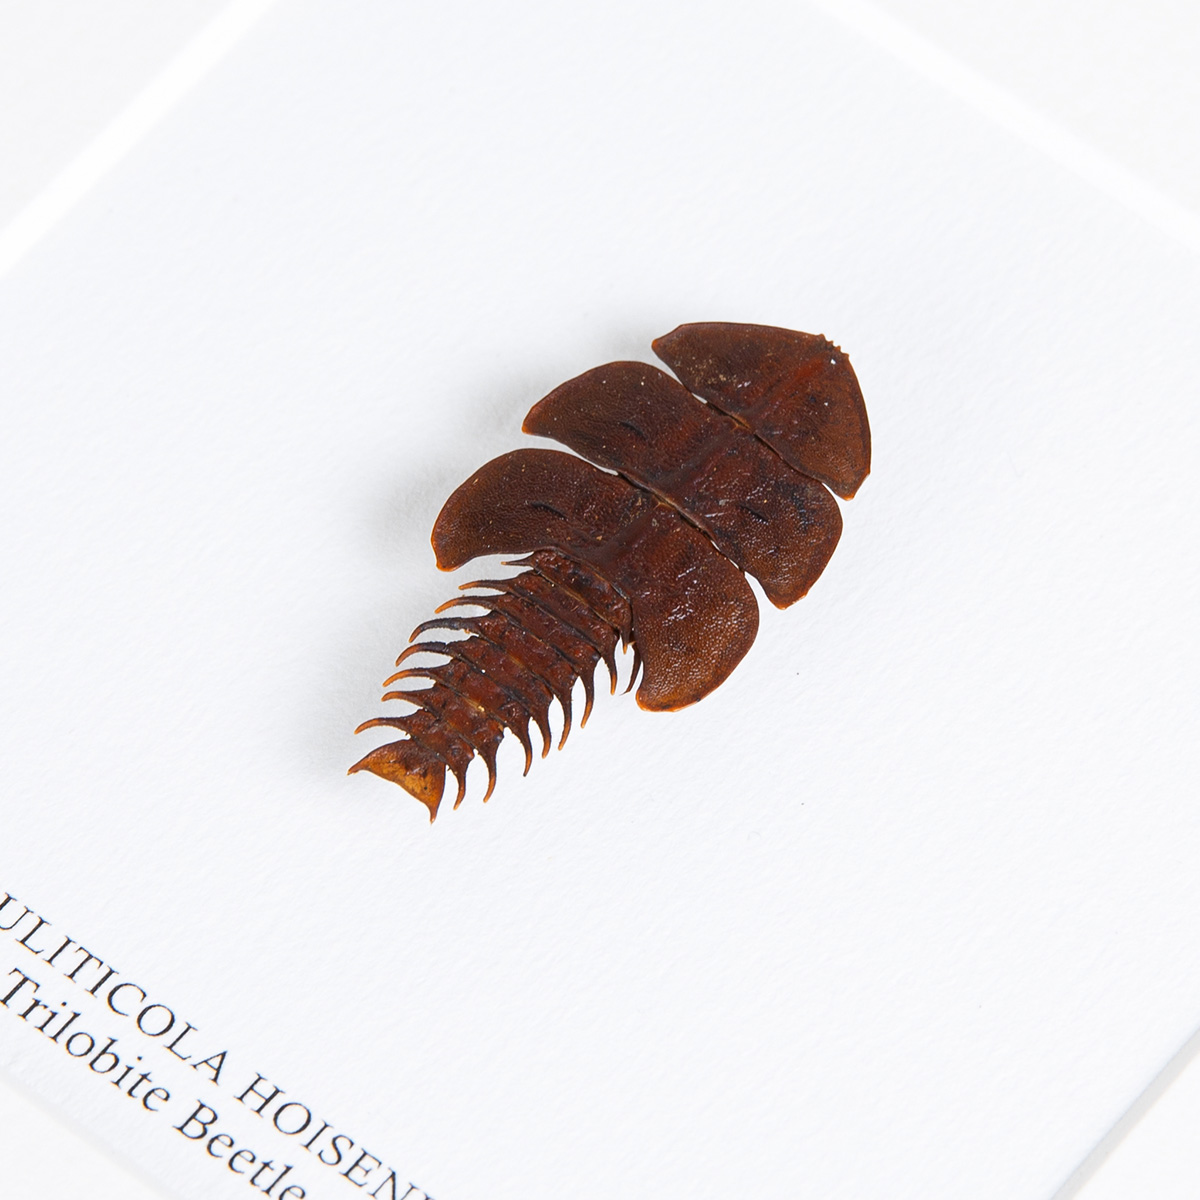 Trilobite Beetle in Box Frame (Duliticola hoiseni)